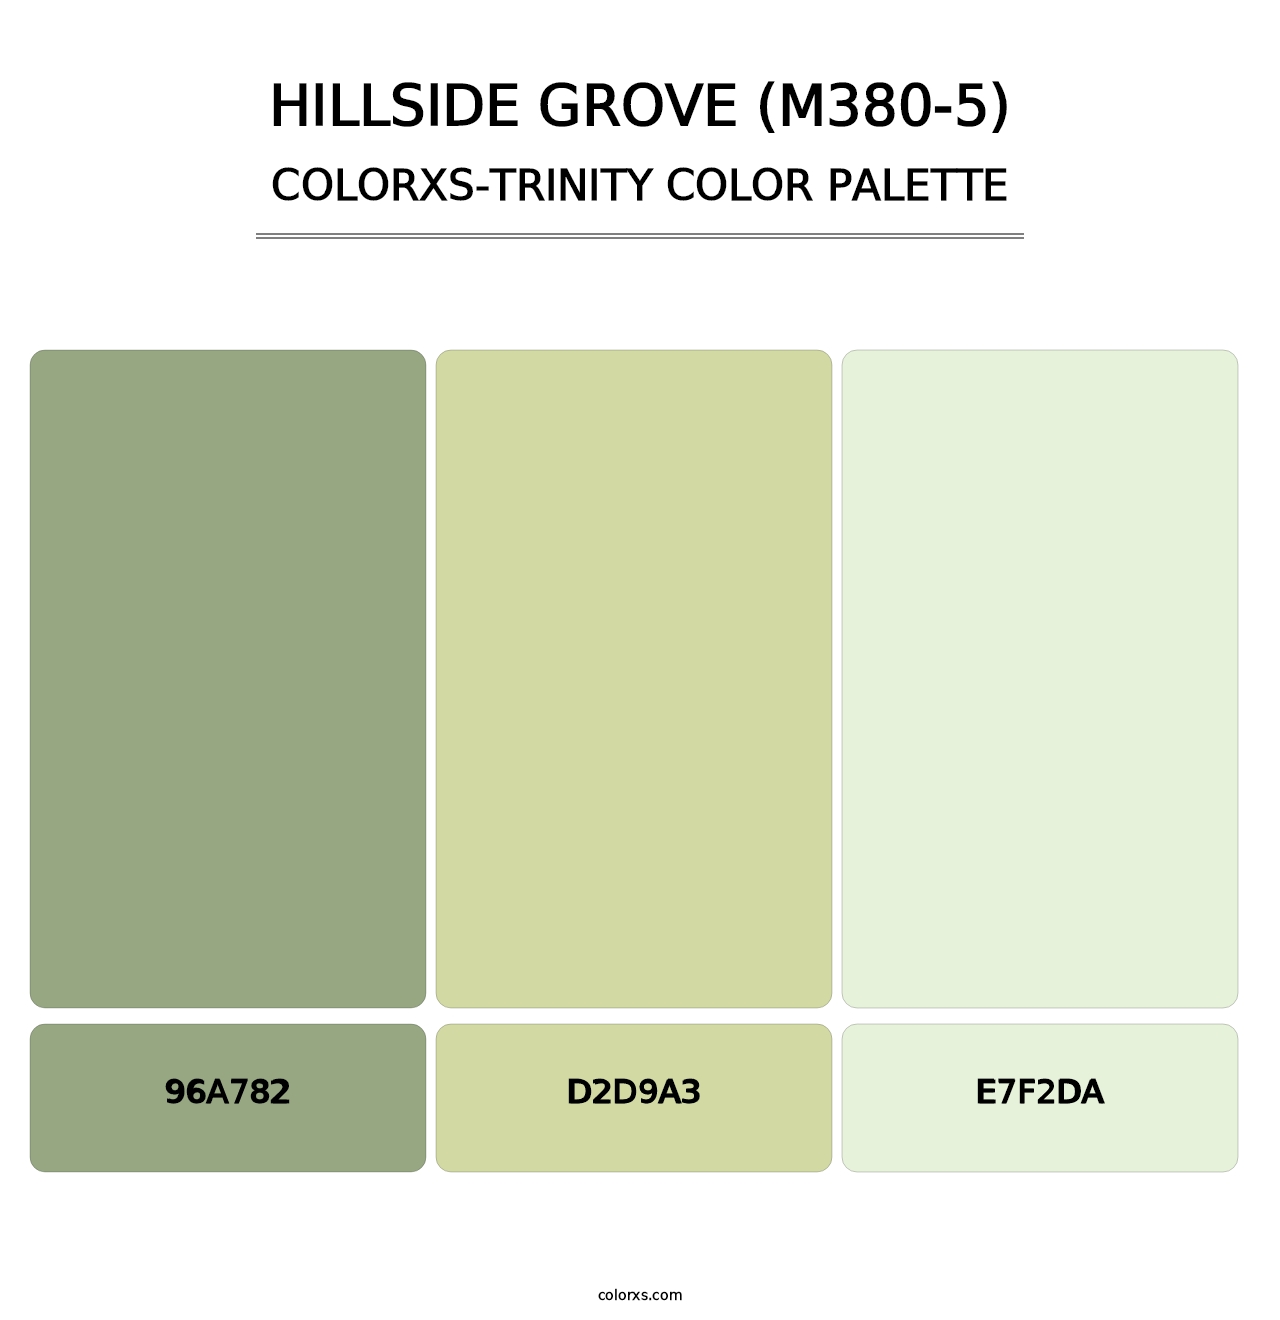 Hillside Grove (M380-5) - Colorxs Trinity Palette